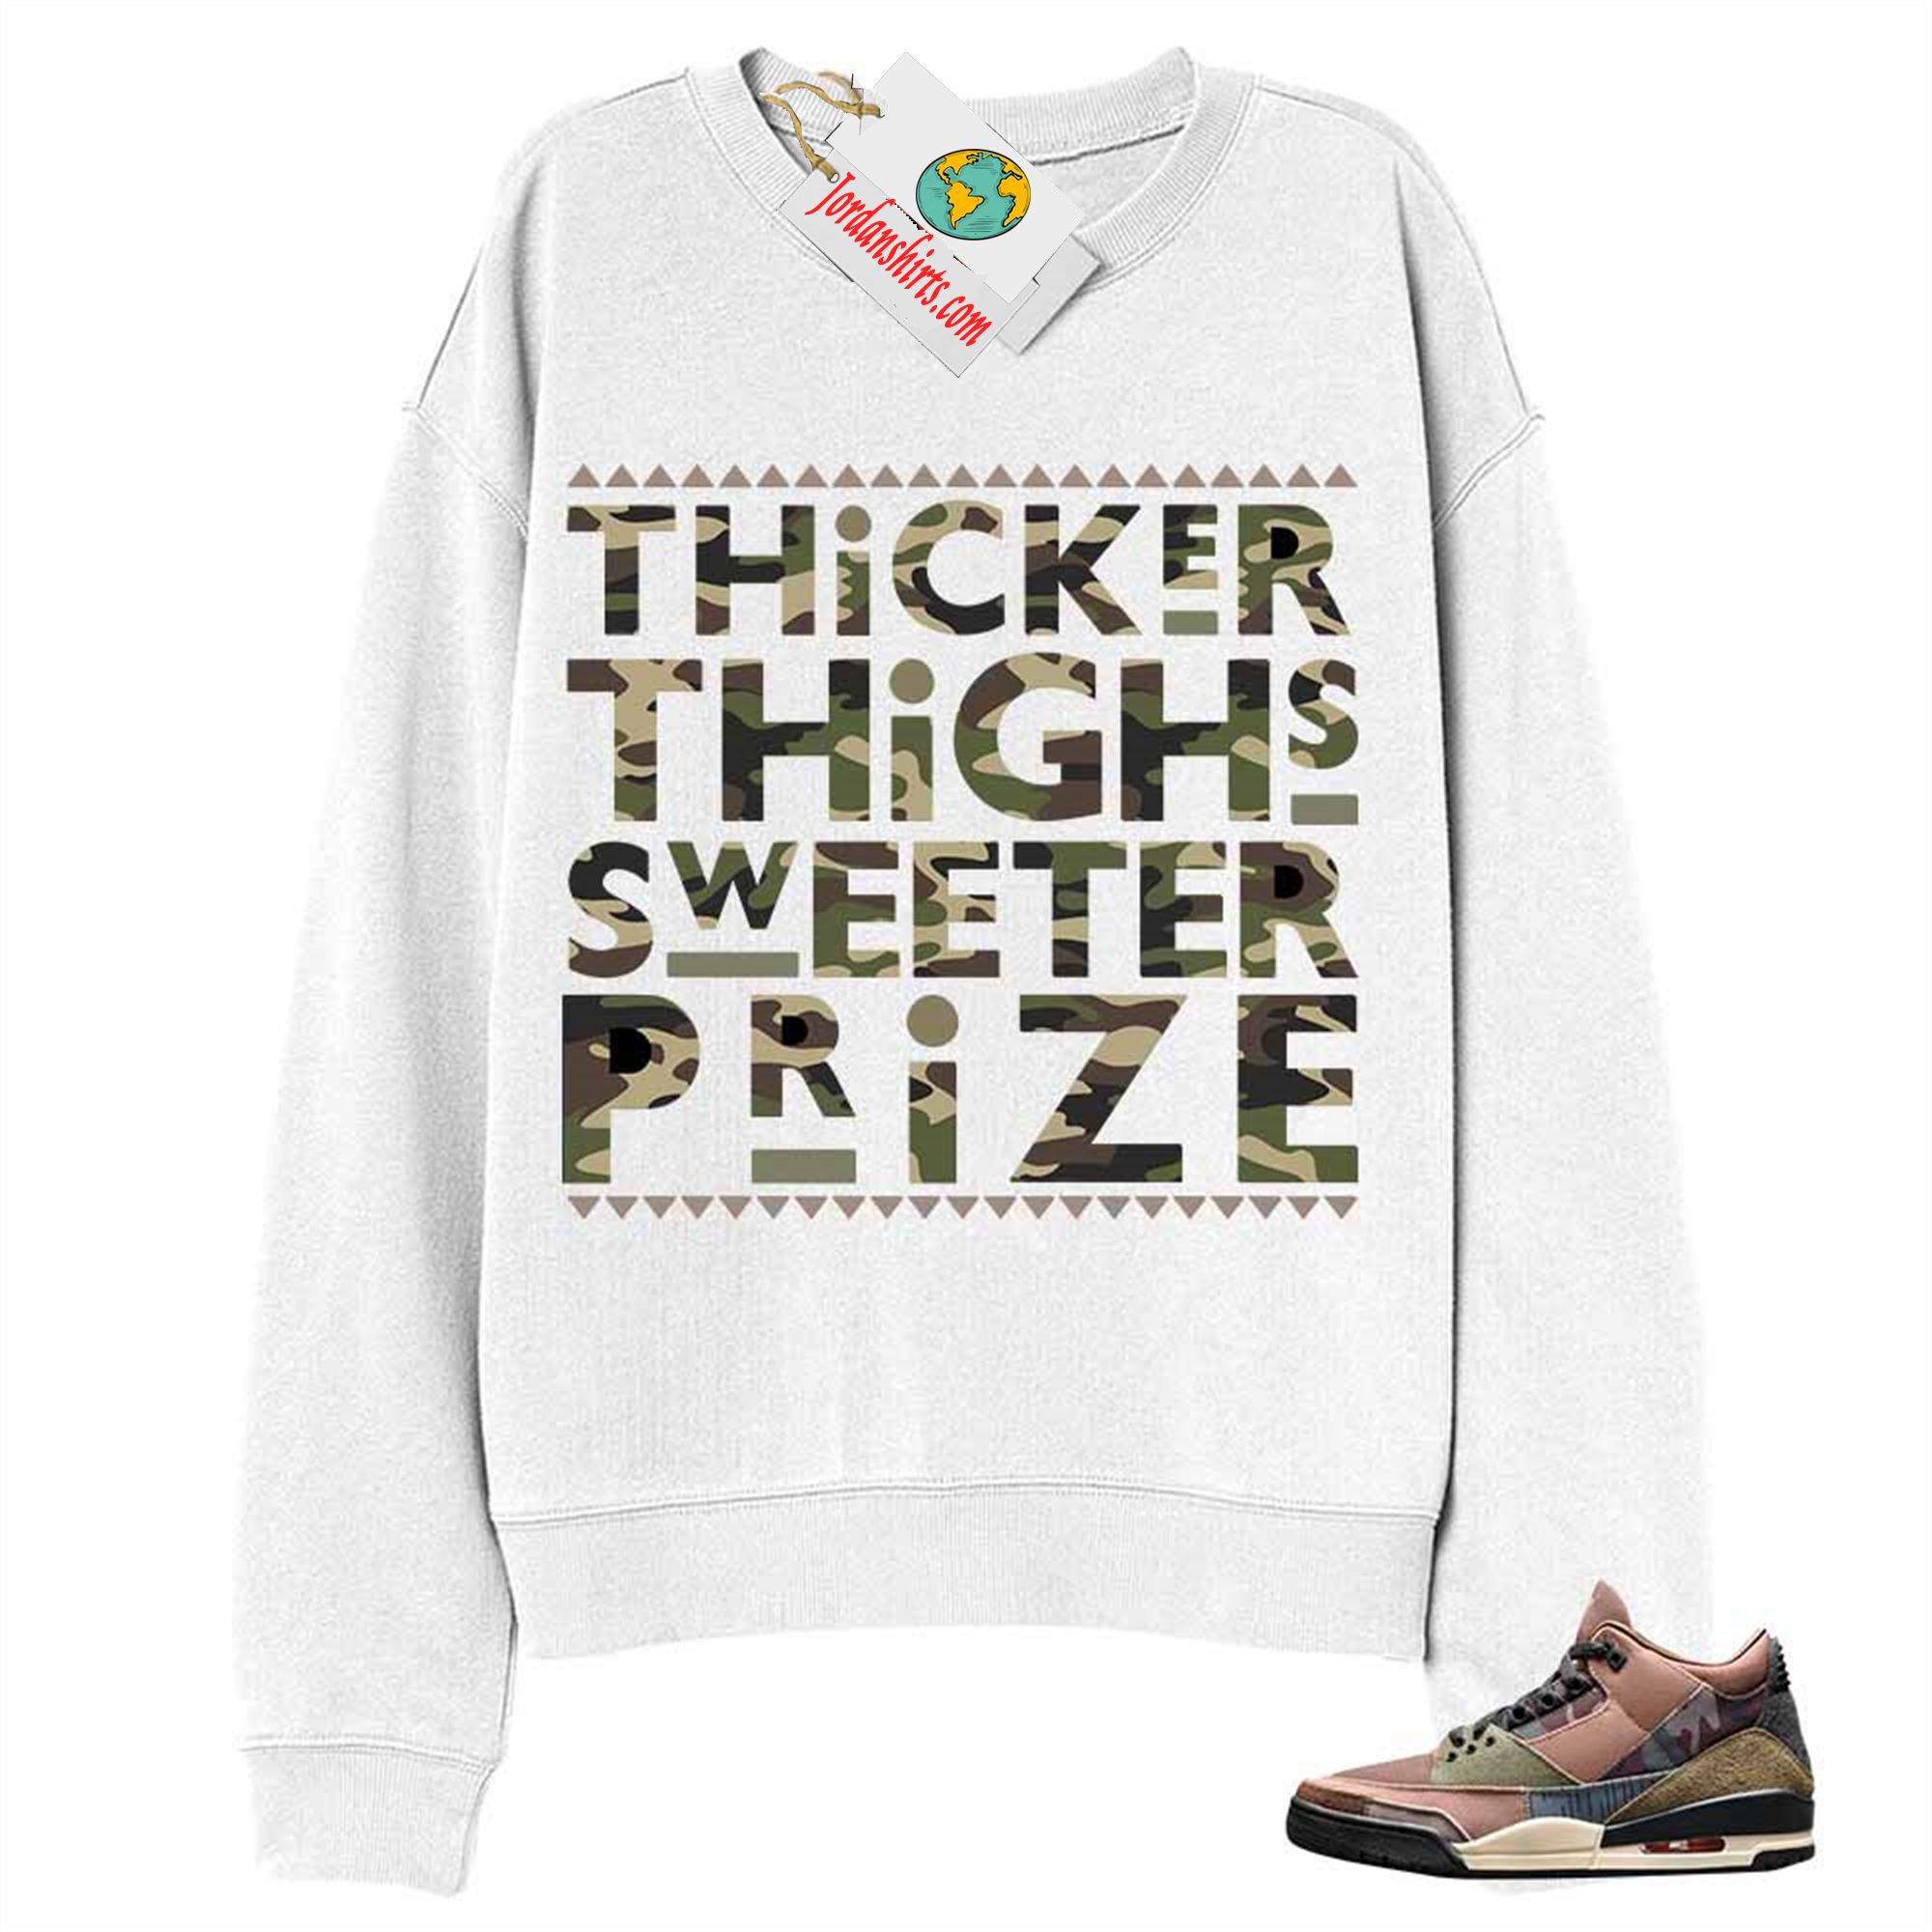 Jordan 3 Sweatshirt, Thicker Thighs Sweeter Prize White Sweatshirt Air Jordan 3 Camo 3s Full Size Up To 5xl